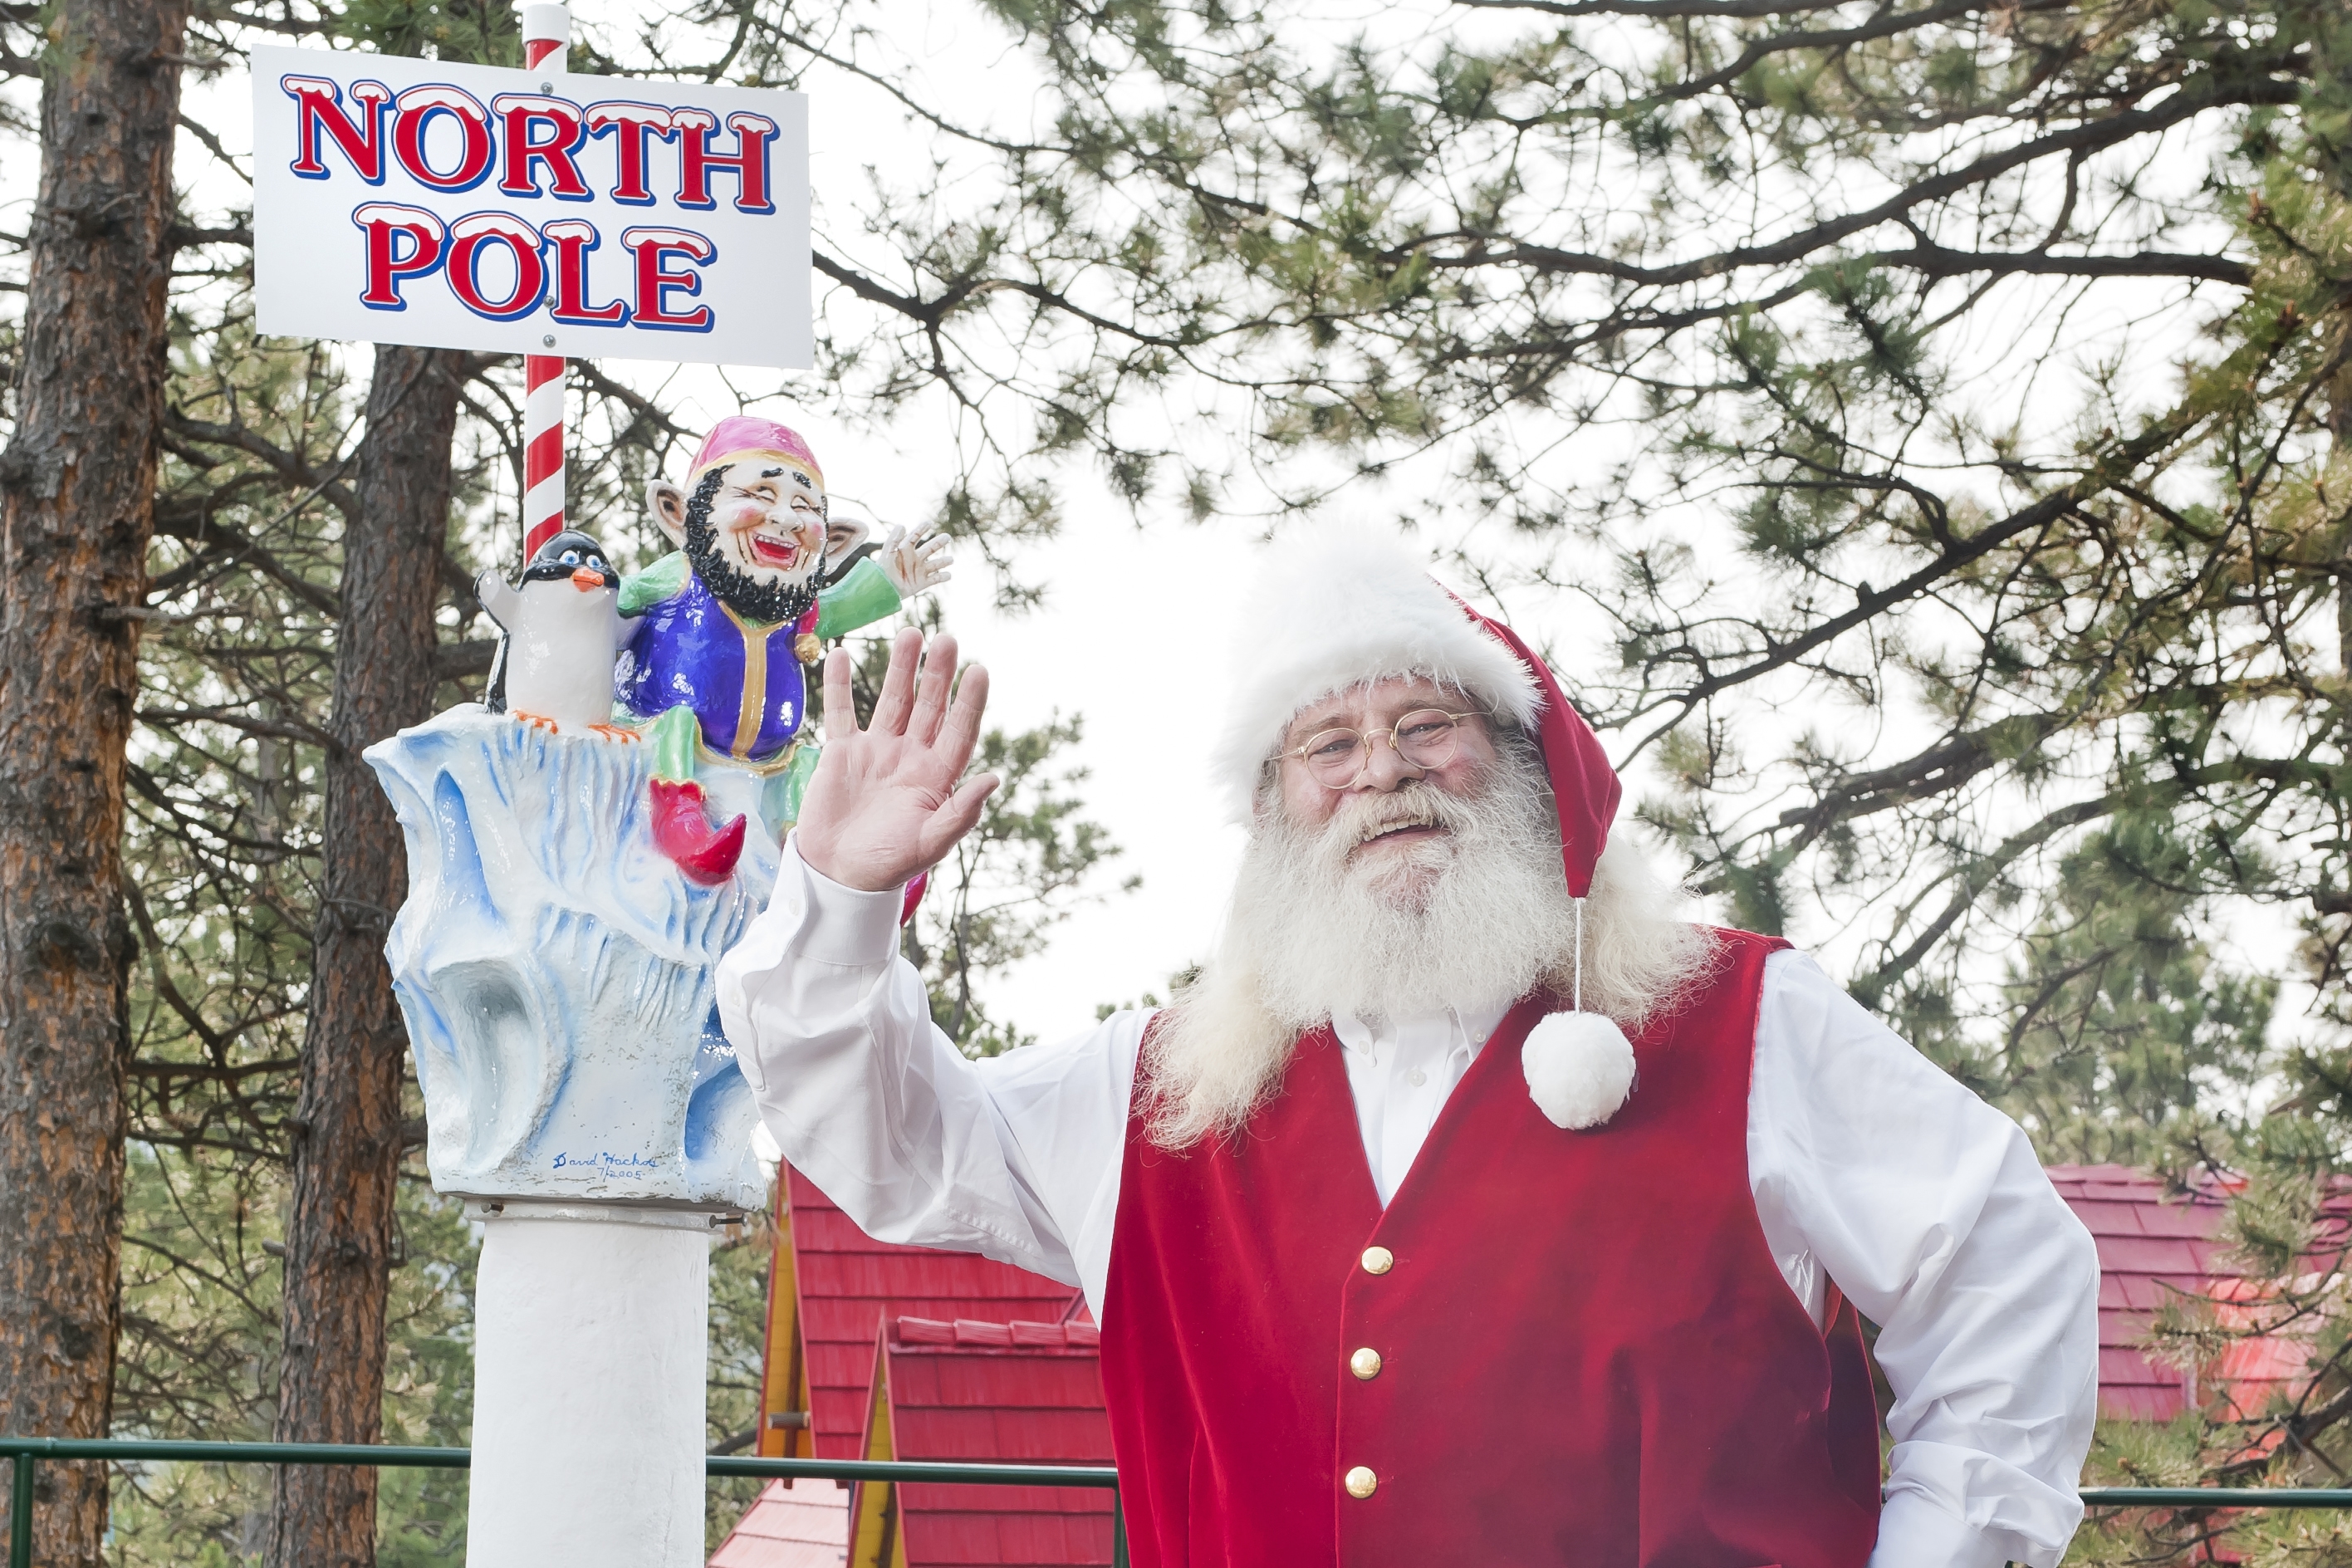 North Pole, Home of Santa's Workshop